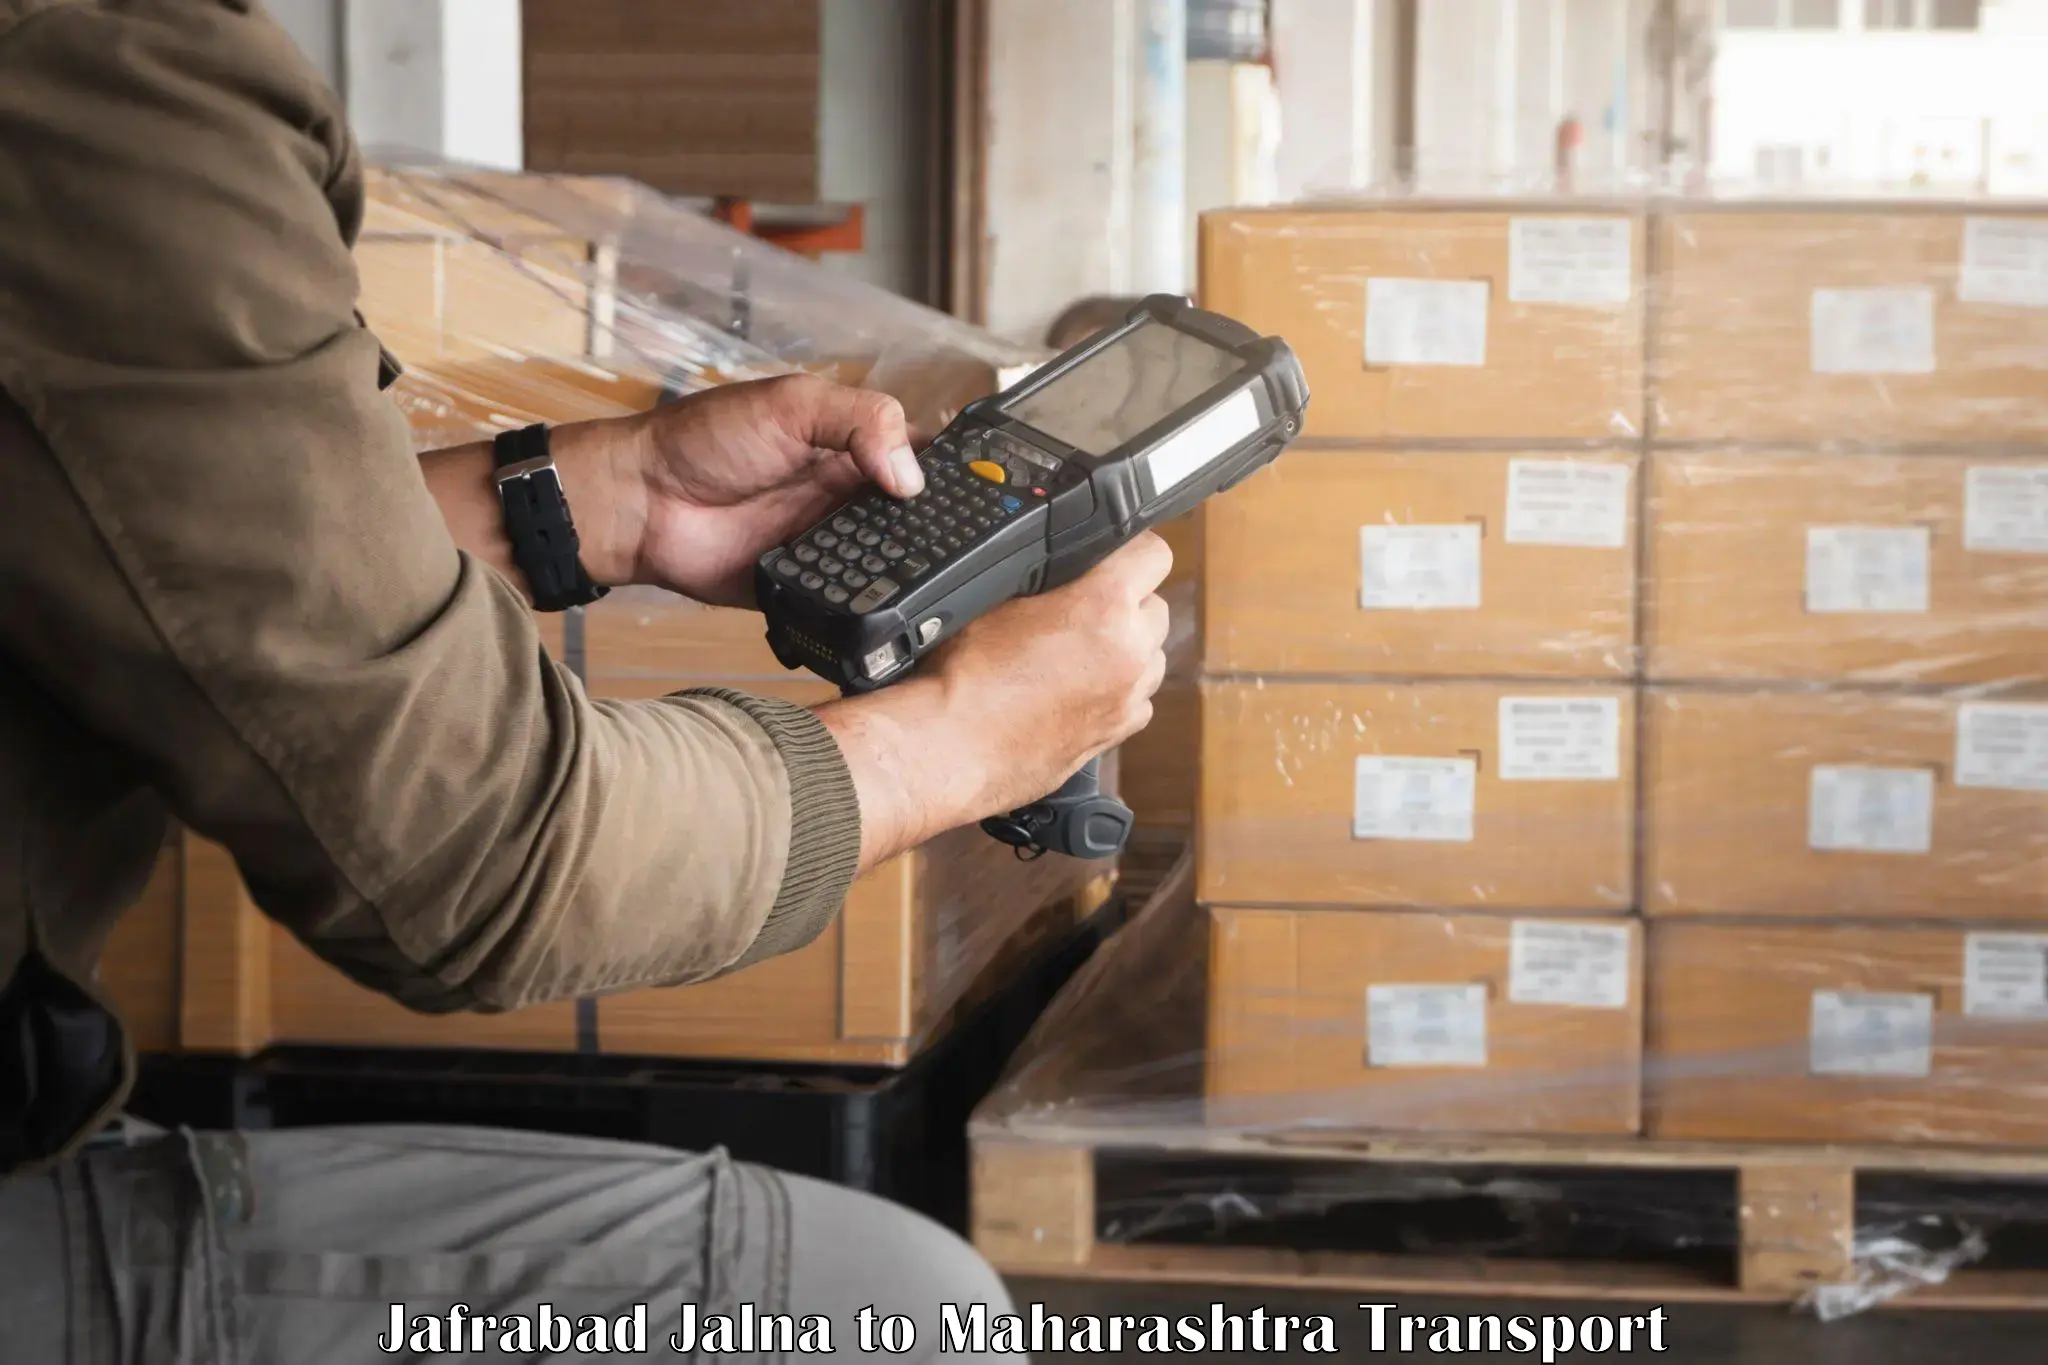 Furniture transport service Jafrabad Jalna to Maharashtra